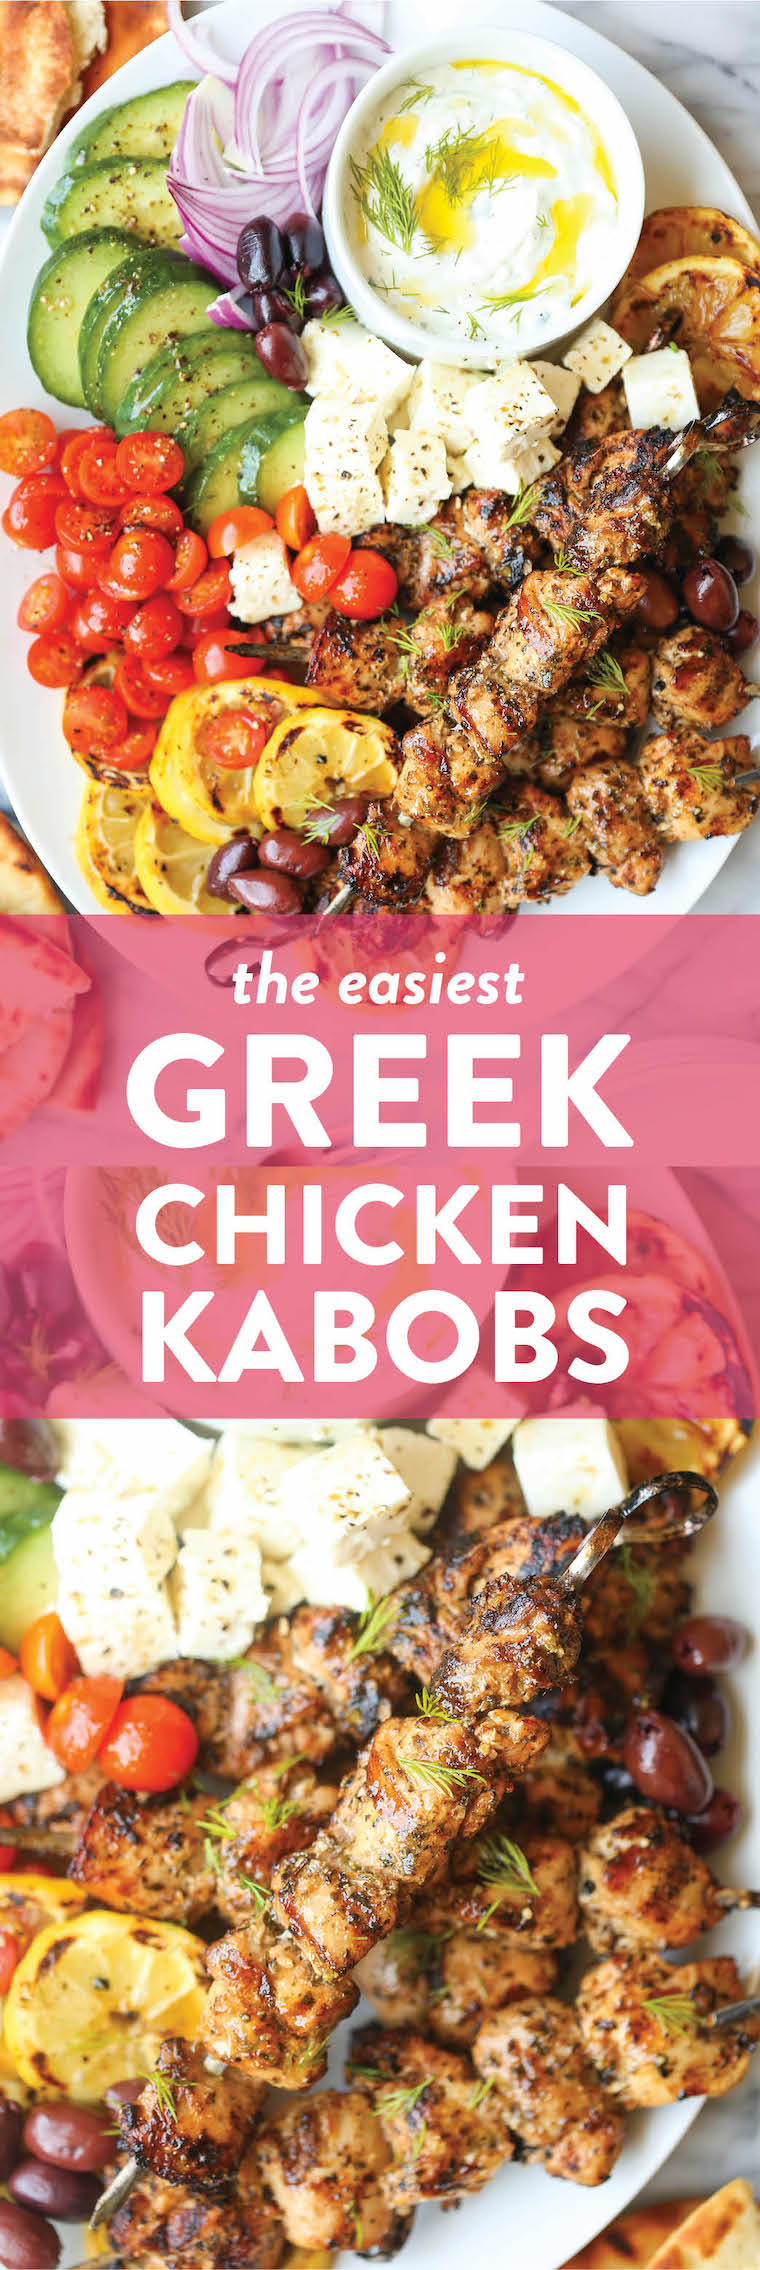 Greek Chicken Kabobs - Super juicy, tender kabobs made with the best marinade ever! Olive oil, lemon juice, paprika, oregano, basil, thyme, garlic. SO BOMB.